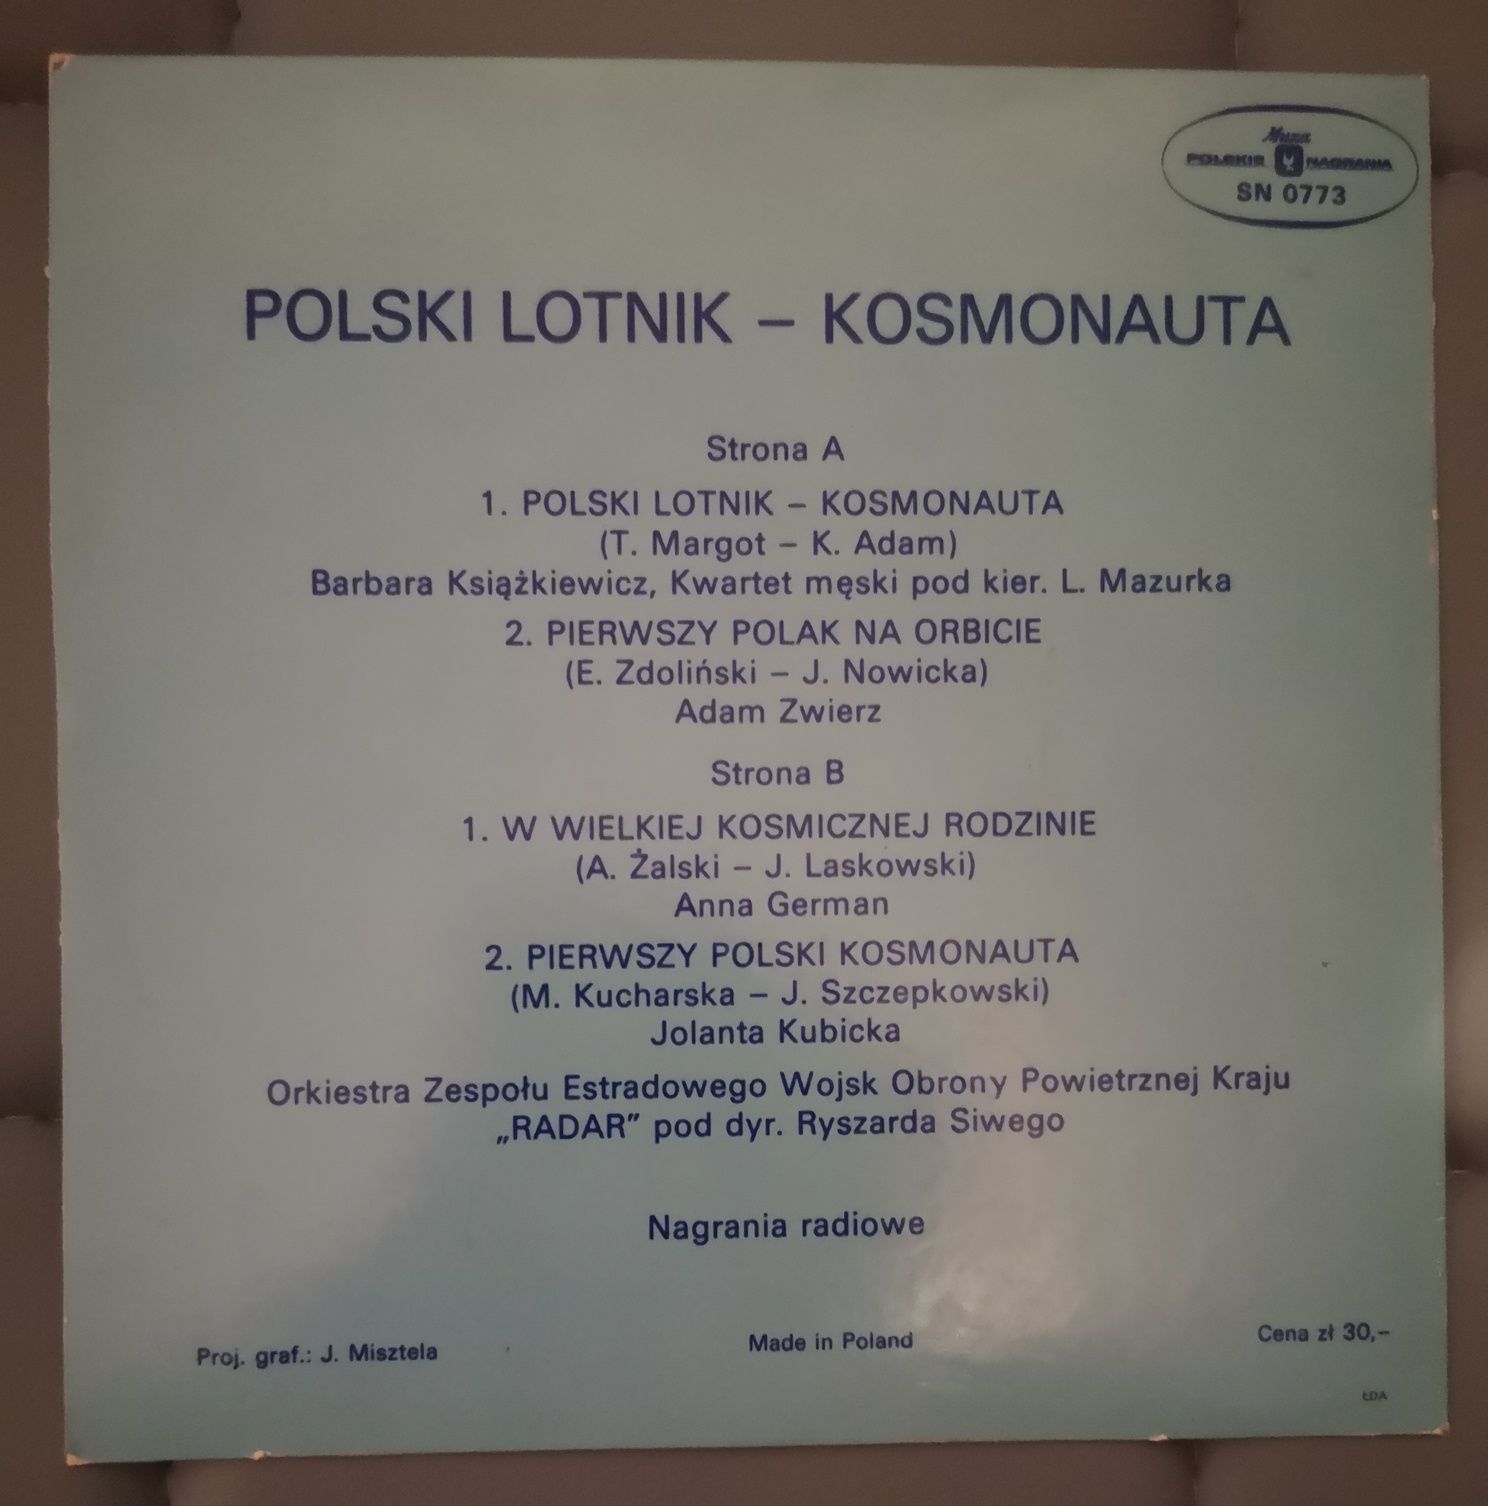 Polski Lotnik - Kosmonauta singiel 7"